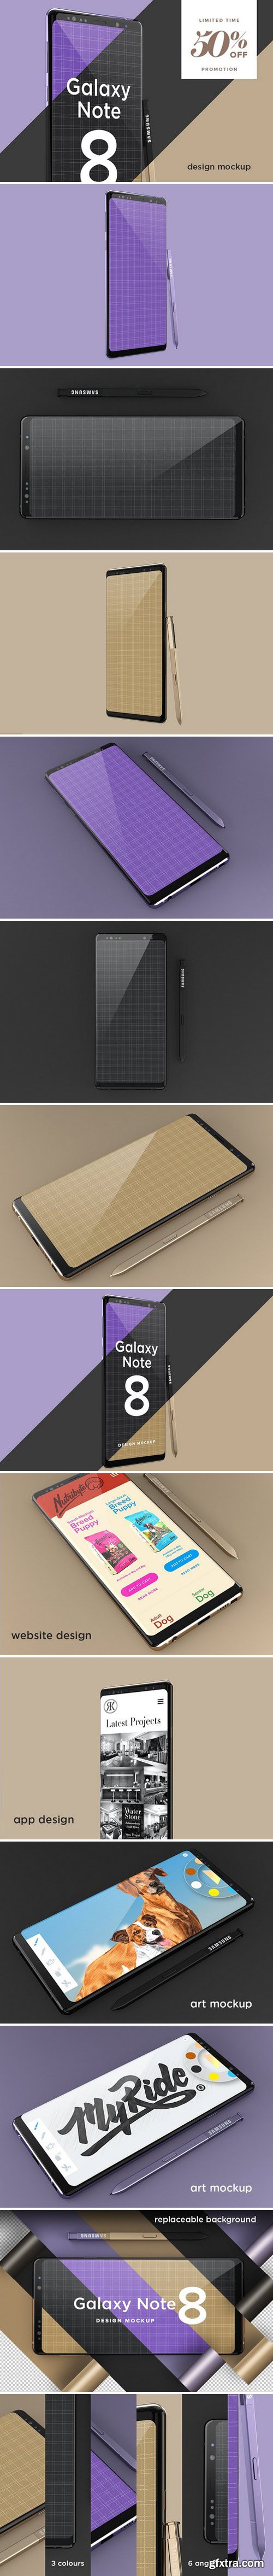 CM - Samsung Galaxy Note 8 Design Mockup 1428437